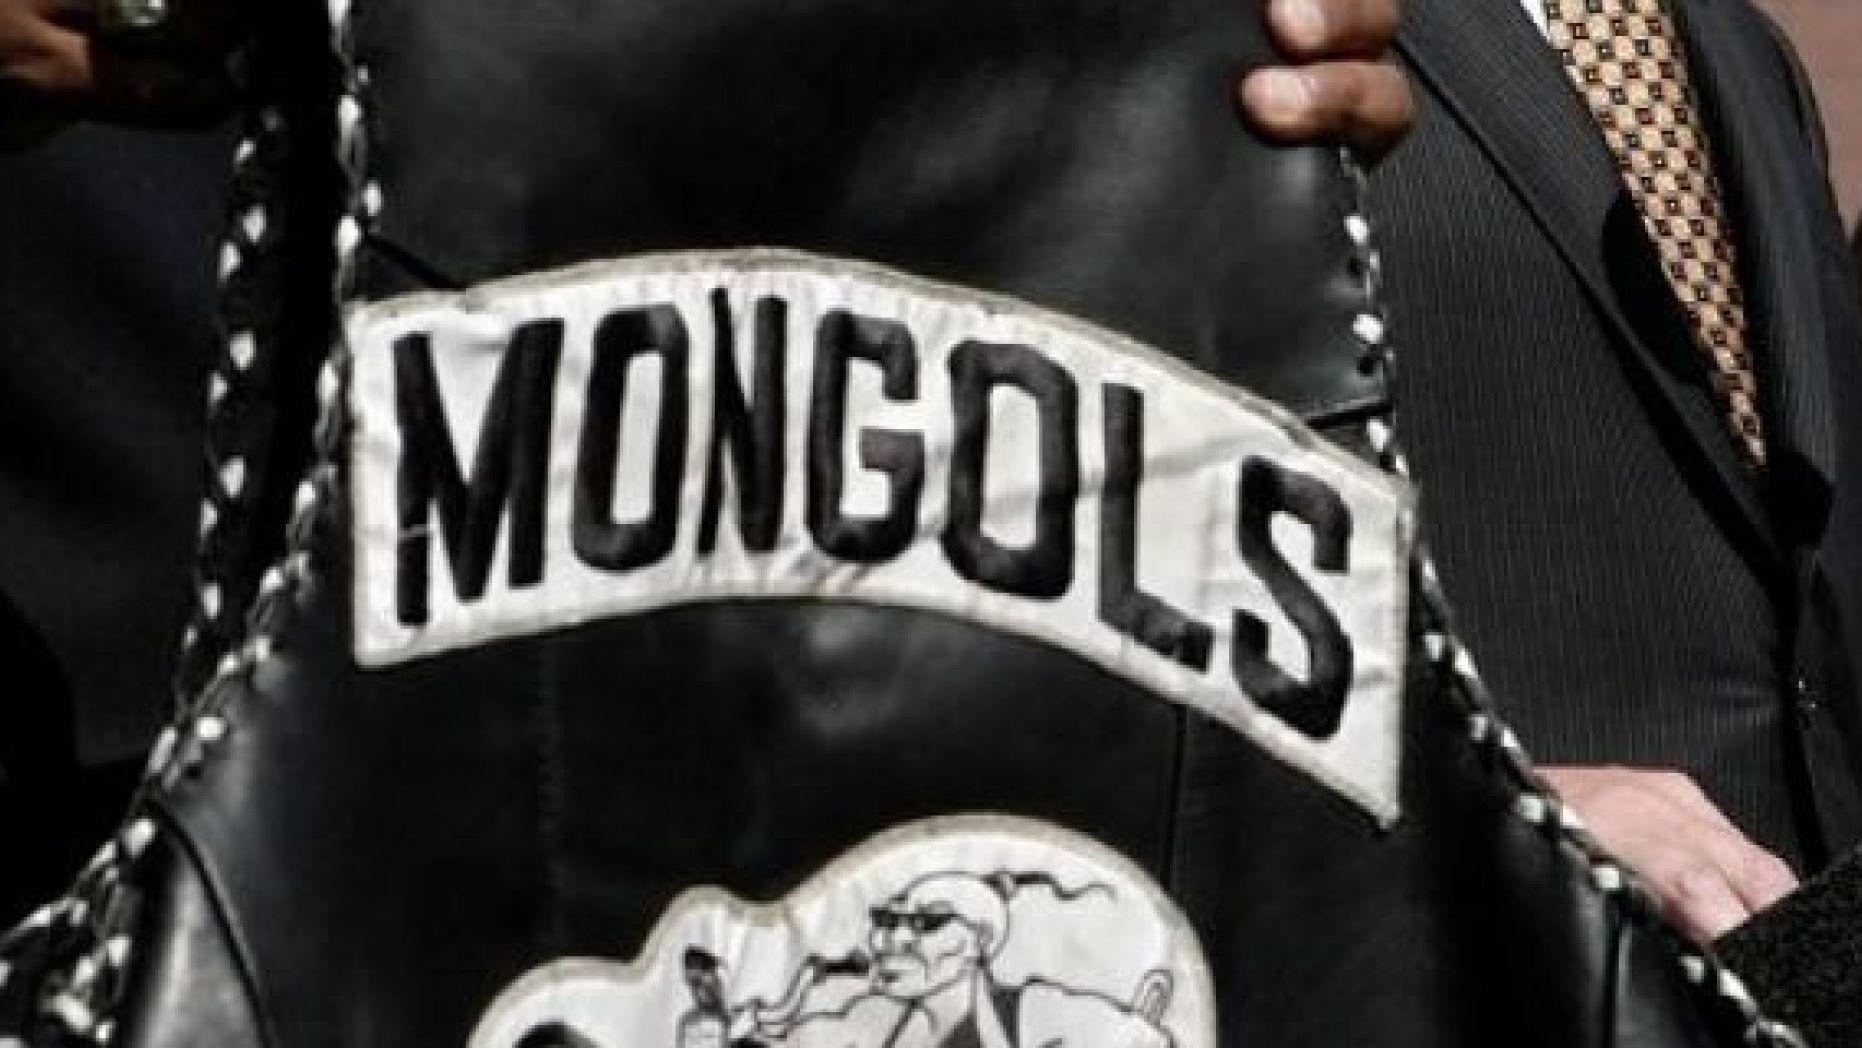 Mongols Logo - Mongols motorcycle gang to lose trademarked logo, jury decides | Fox ...